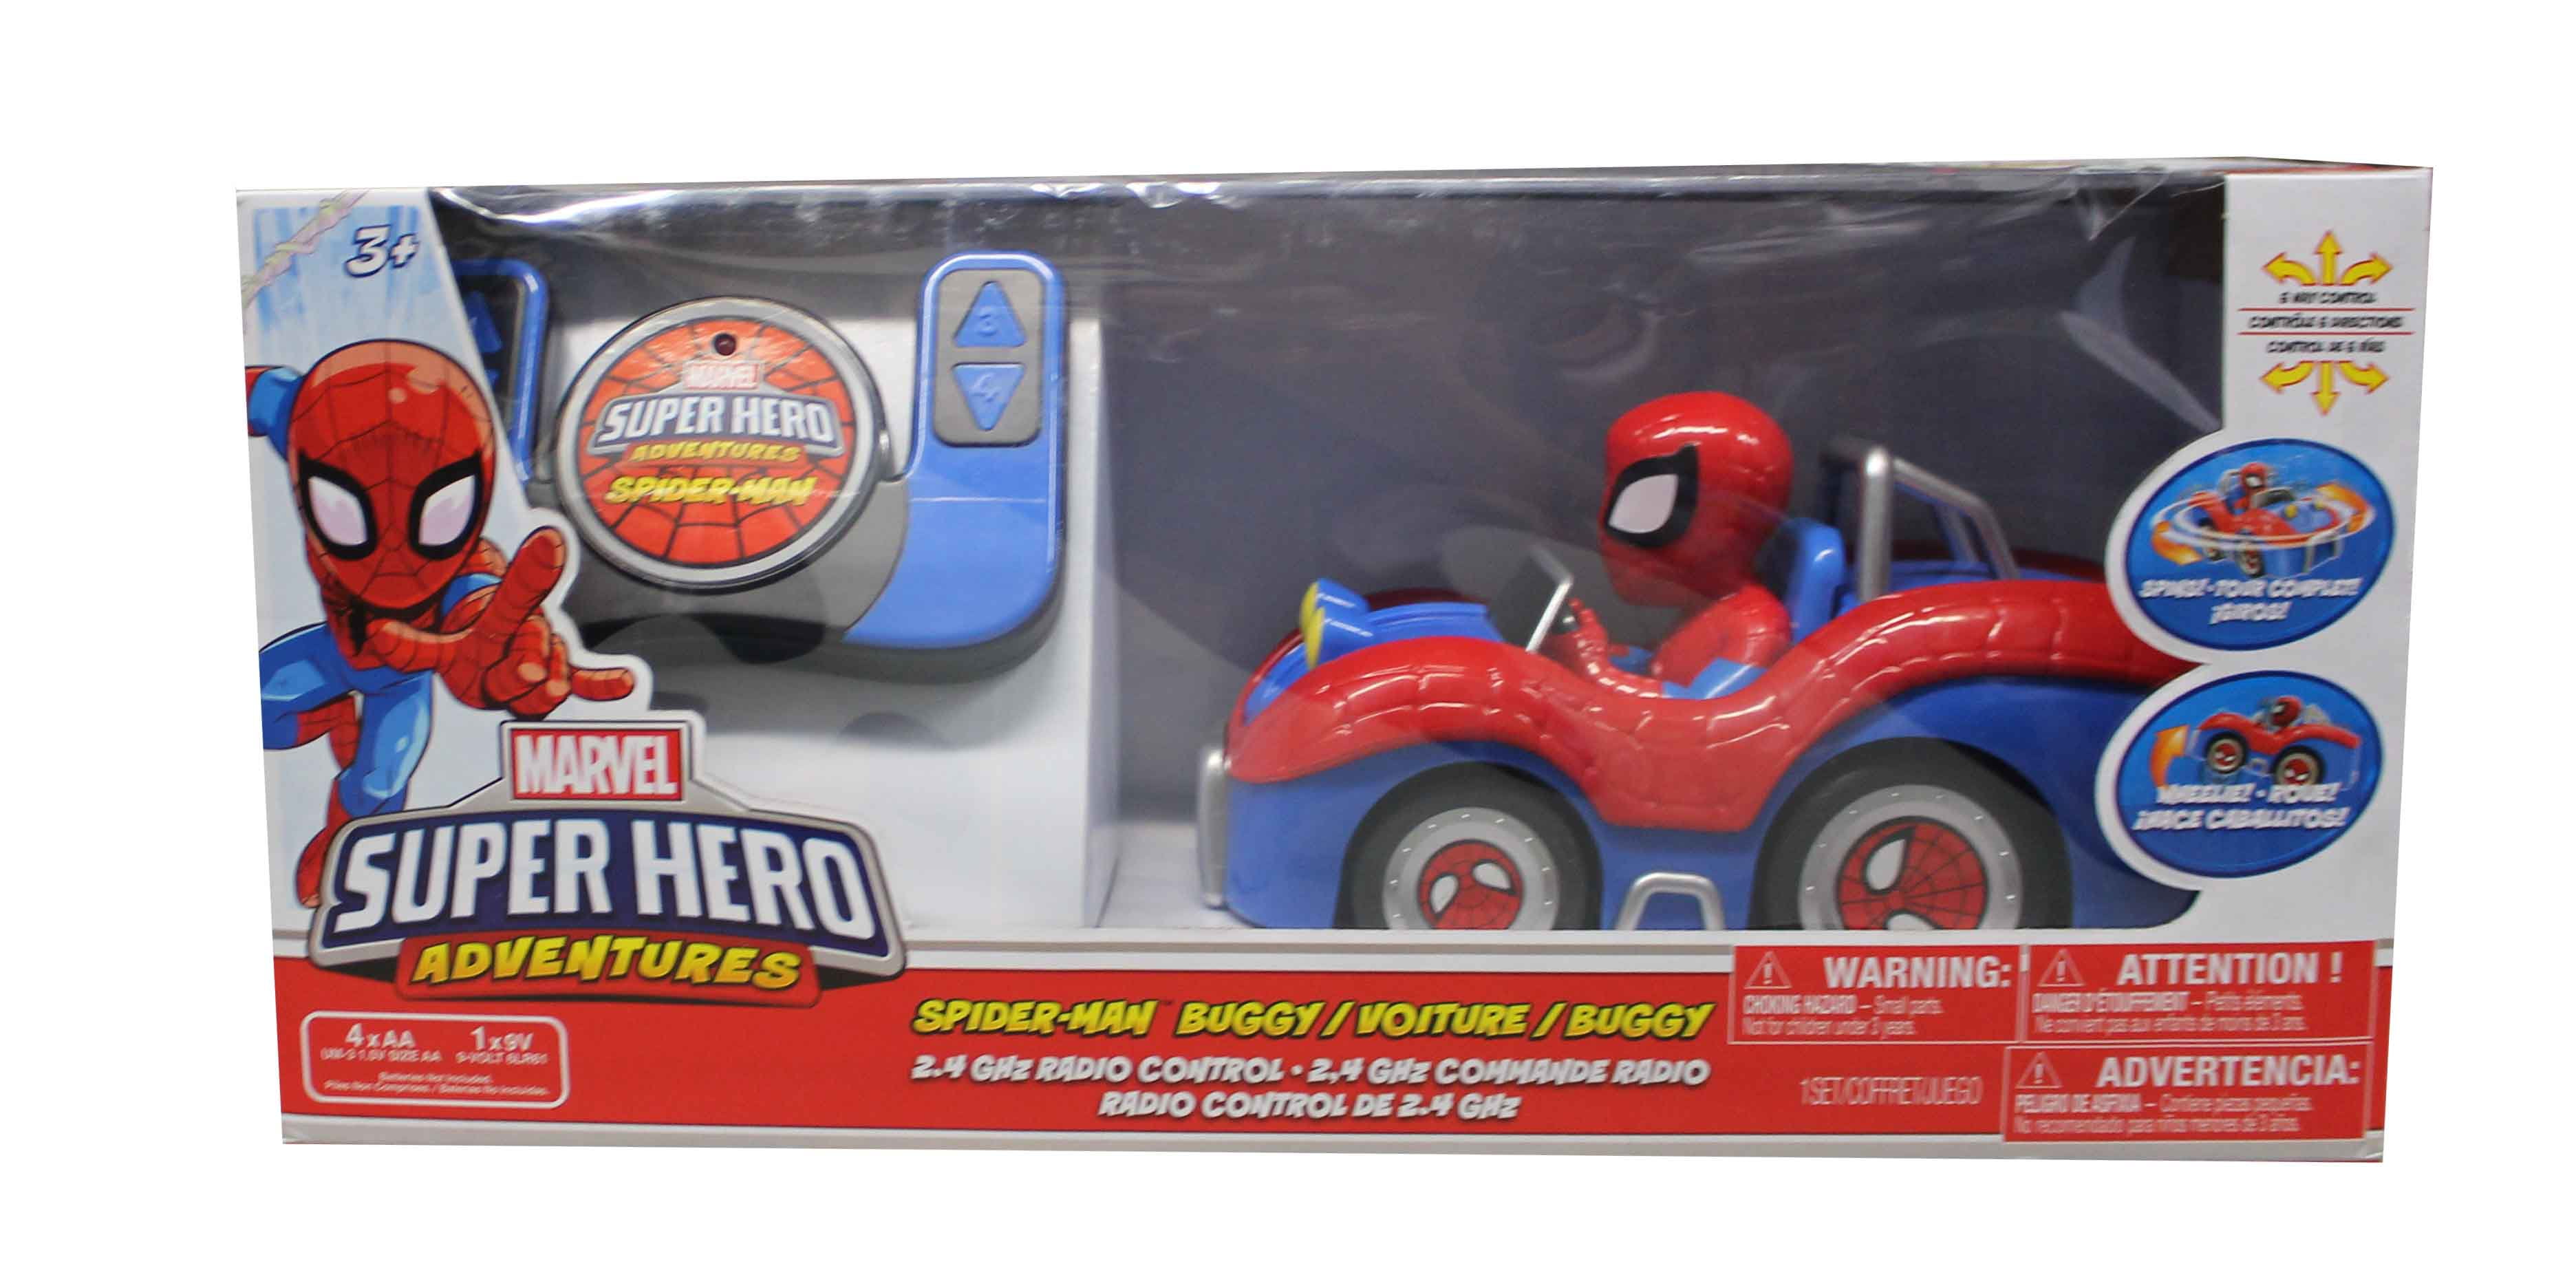 Kids Radio Control Superhero Spiderman Rc Racing Toy Car Christmas Gift 